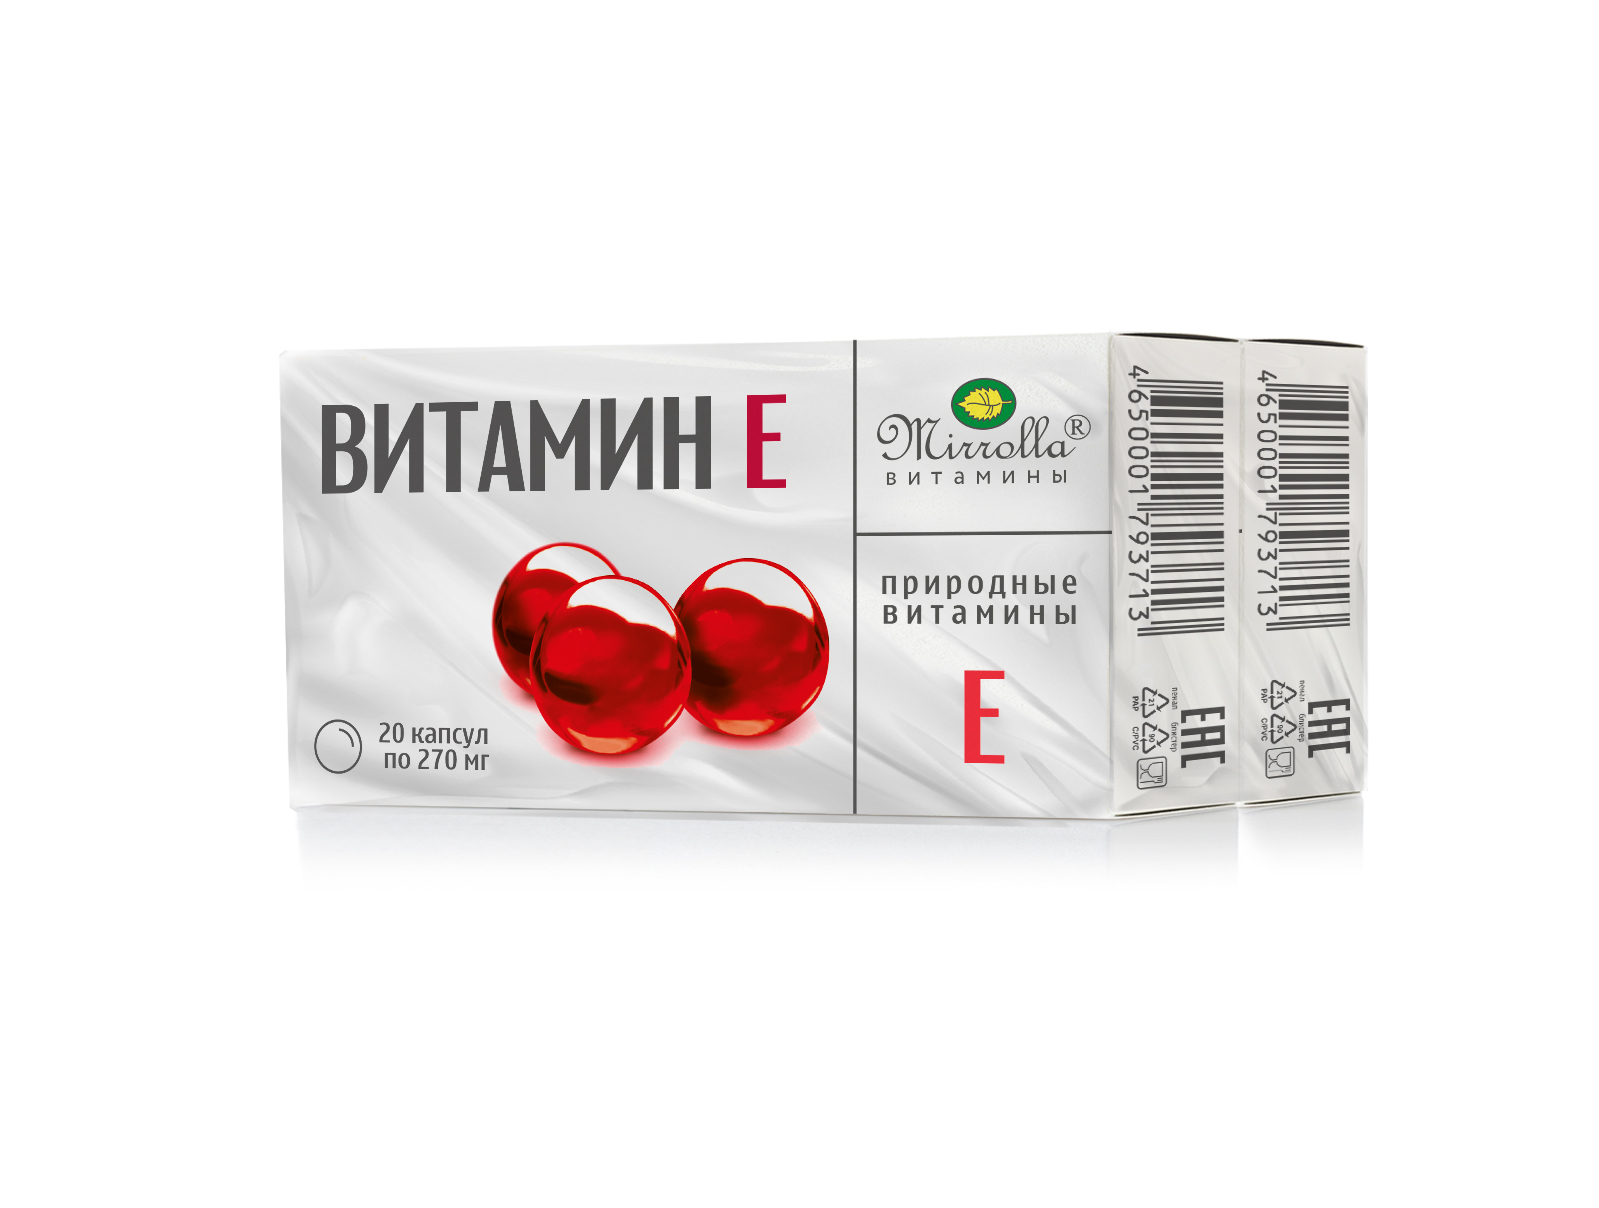 Viên vitamin e mirrolla Nga